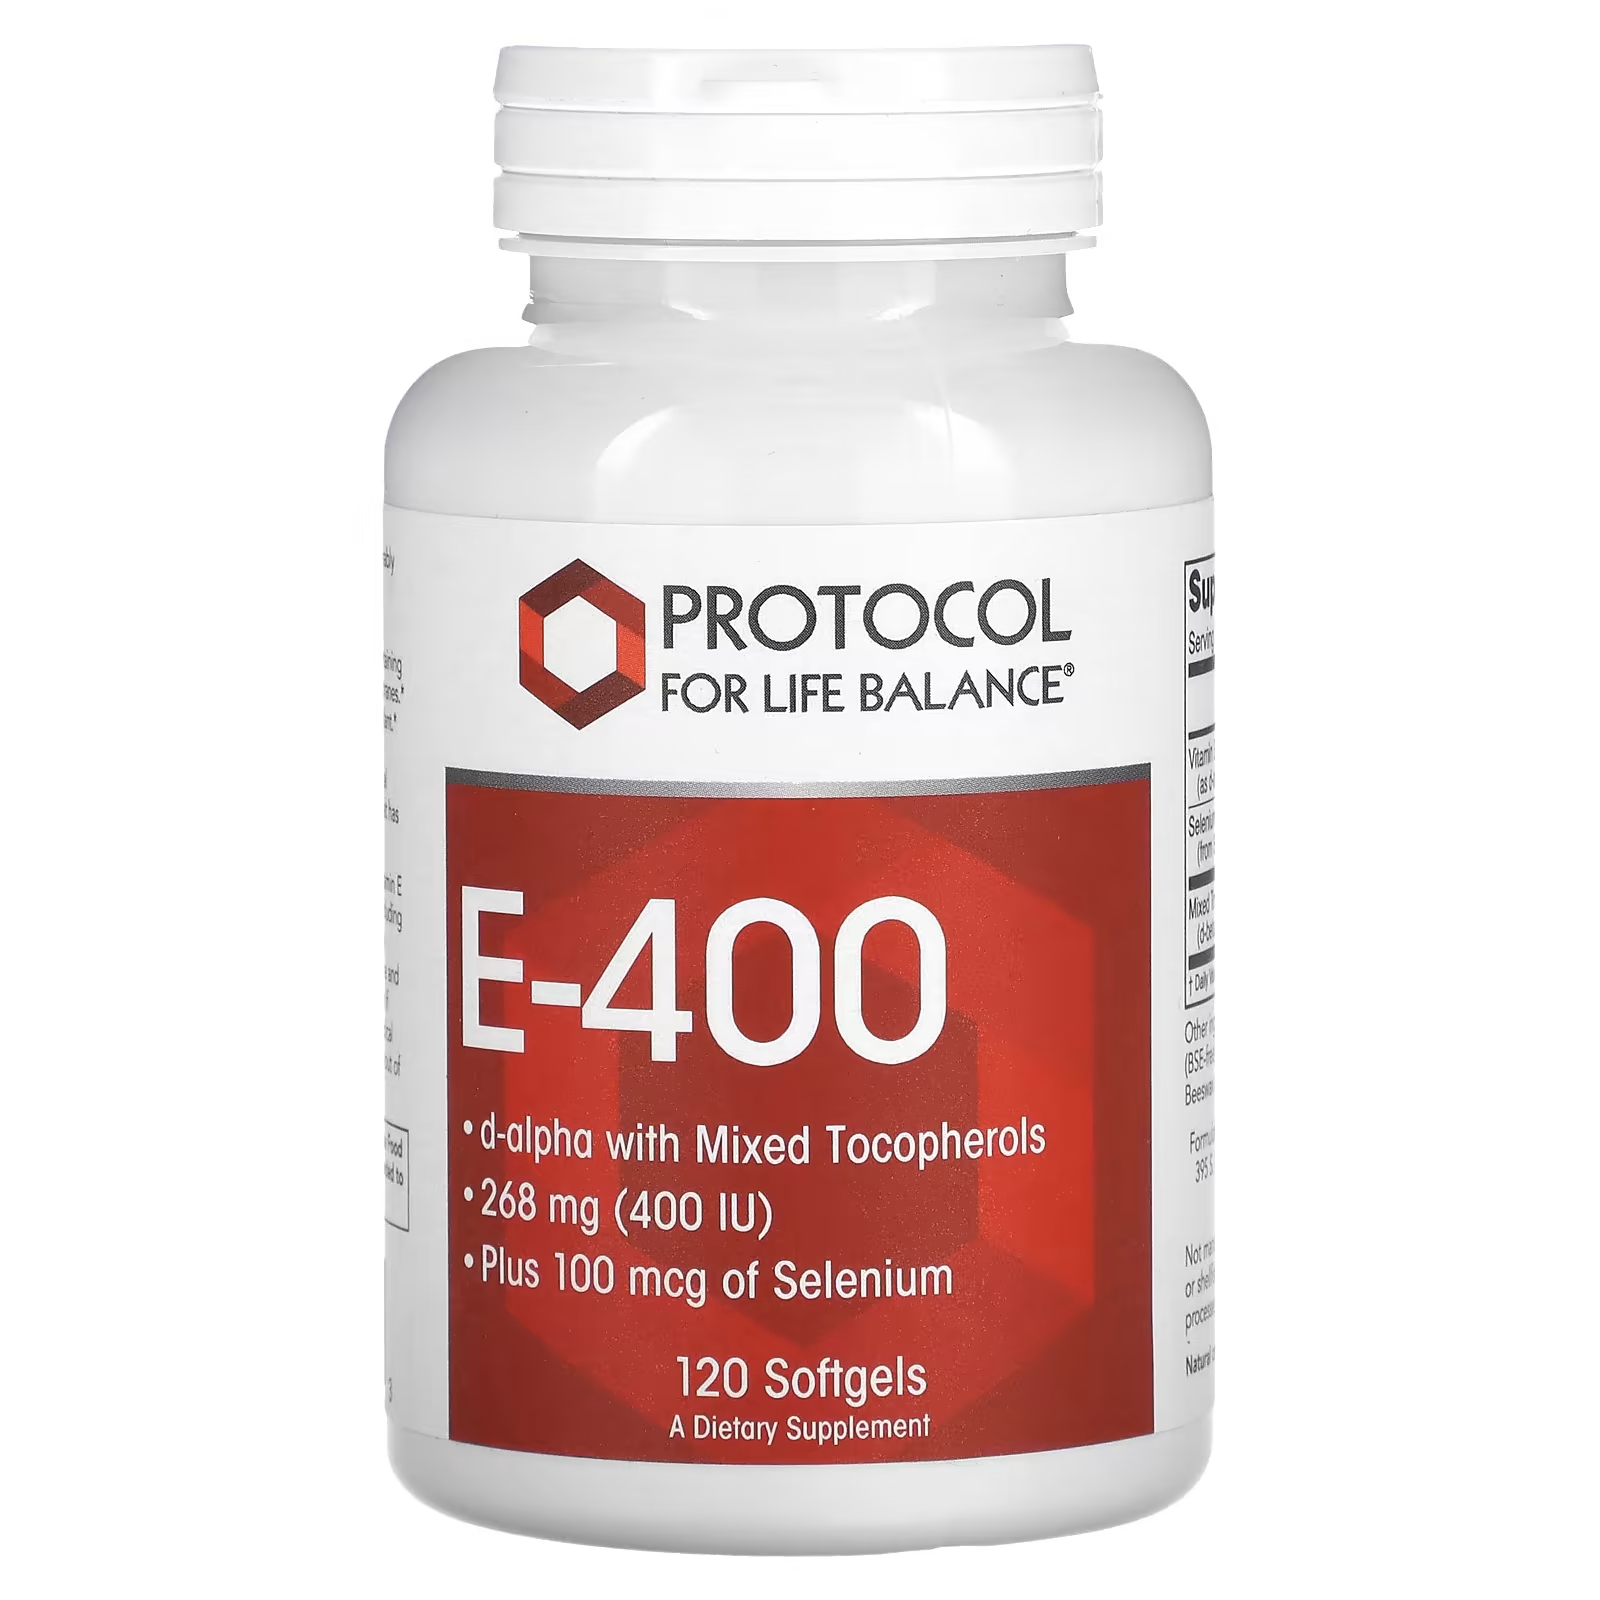 цена Протокол Life Balance E-400 268 мг (400 МЕ) 120 мягких таблеток Protocol for Life Balance